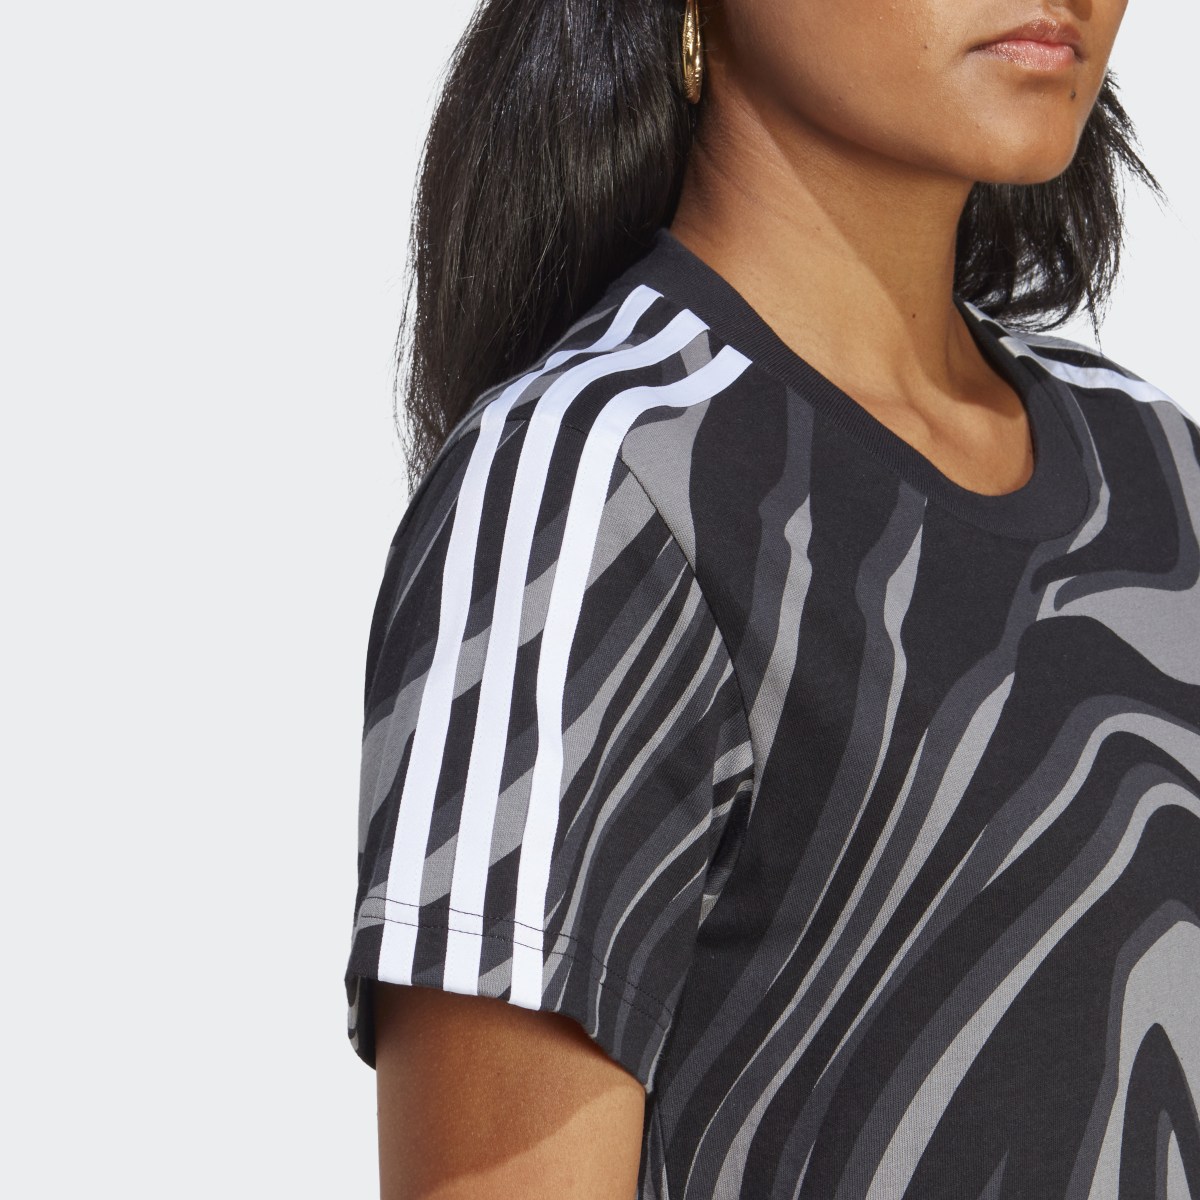 Adidas Abstract Allover Animal Print T-Shirt. 7